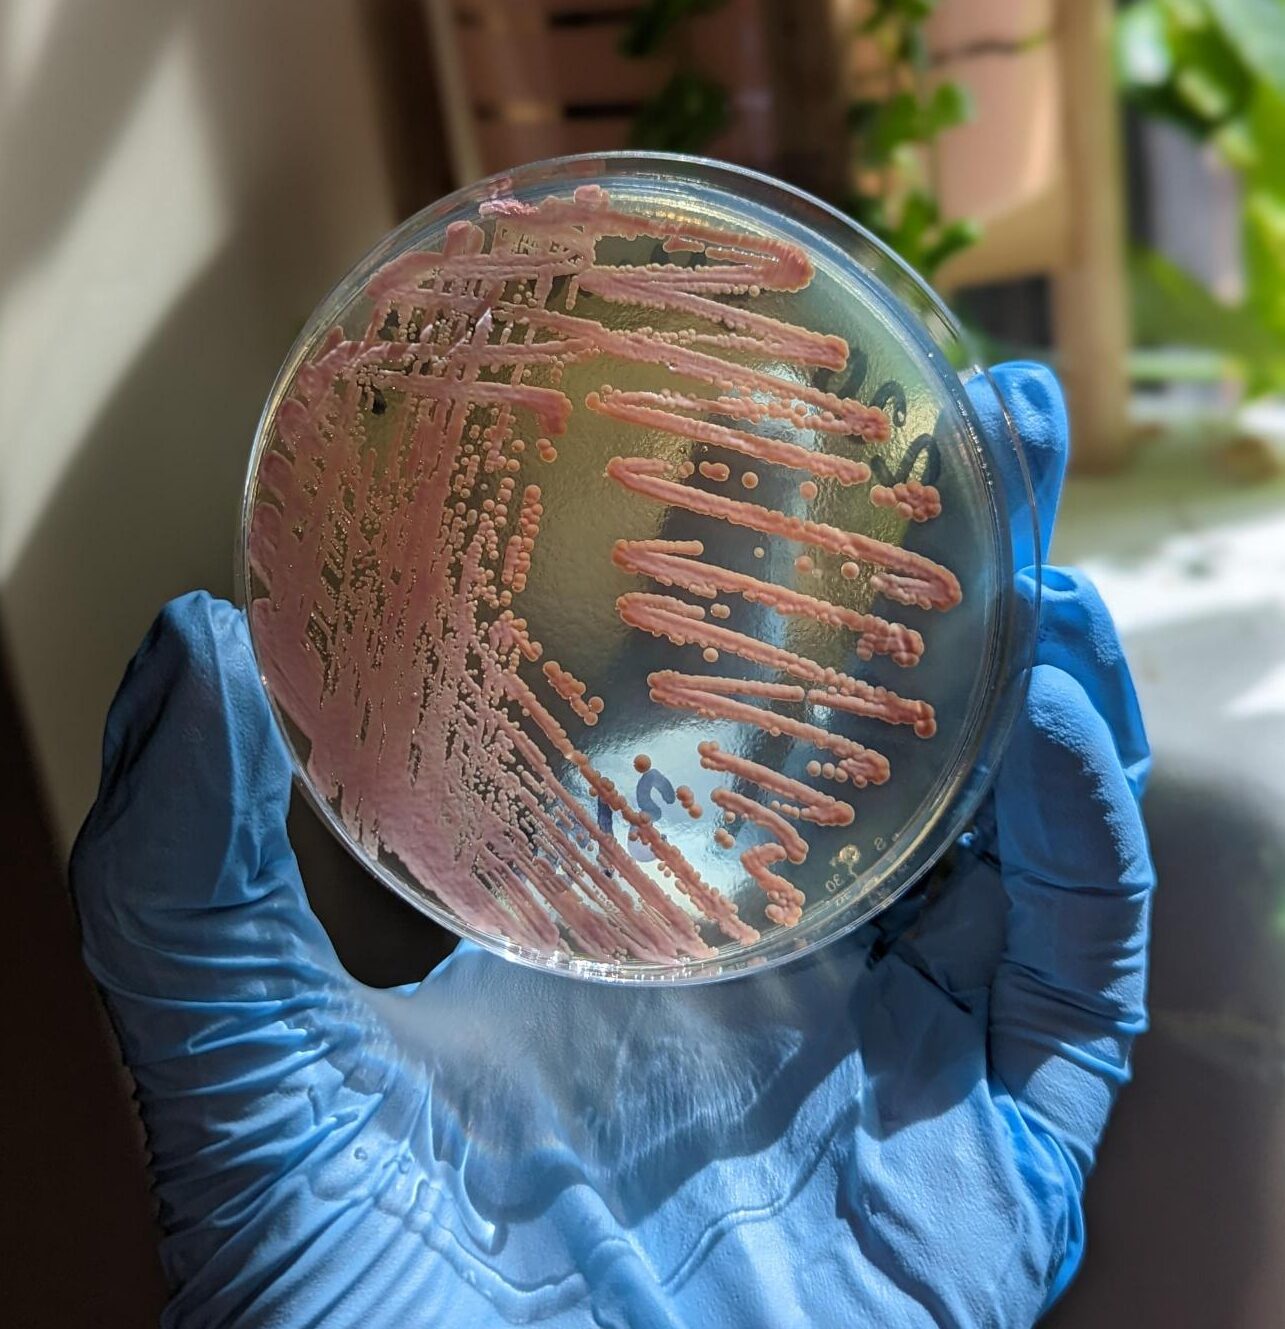 Plate sample or bacteria